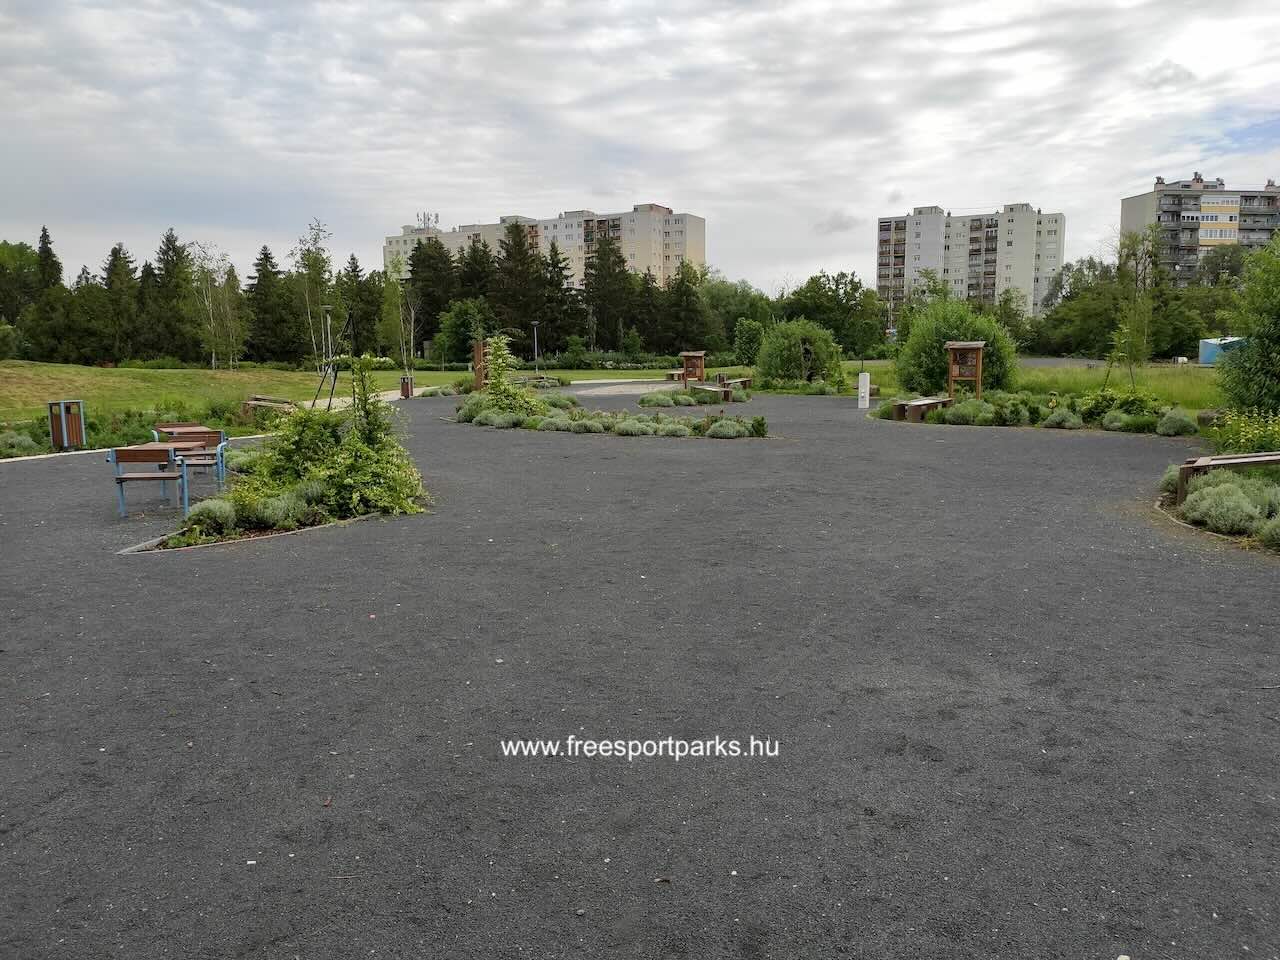 Bemutatókert, Szombathely Sportliget - Free Sport Parks Blog